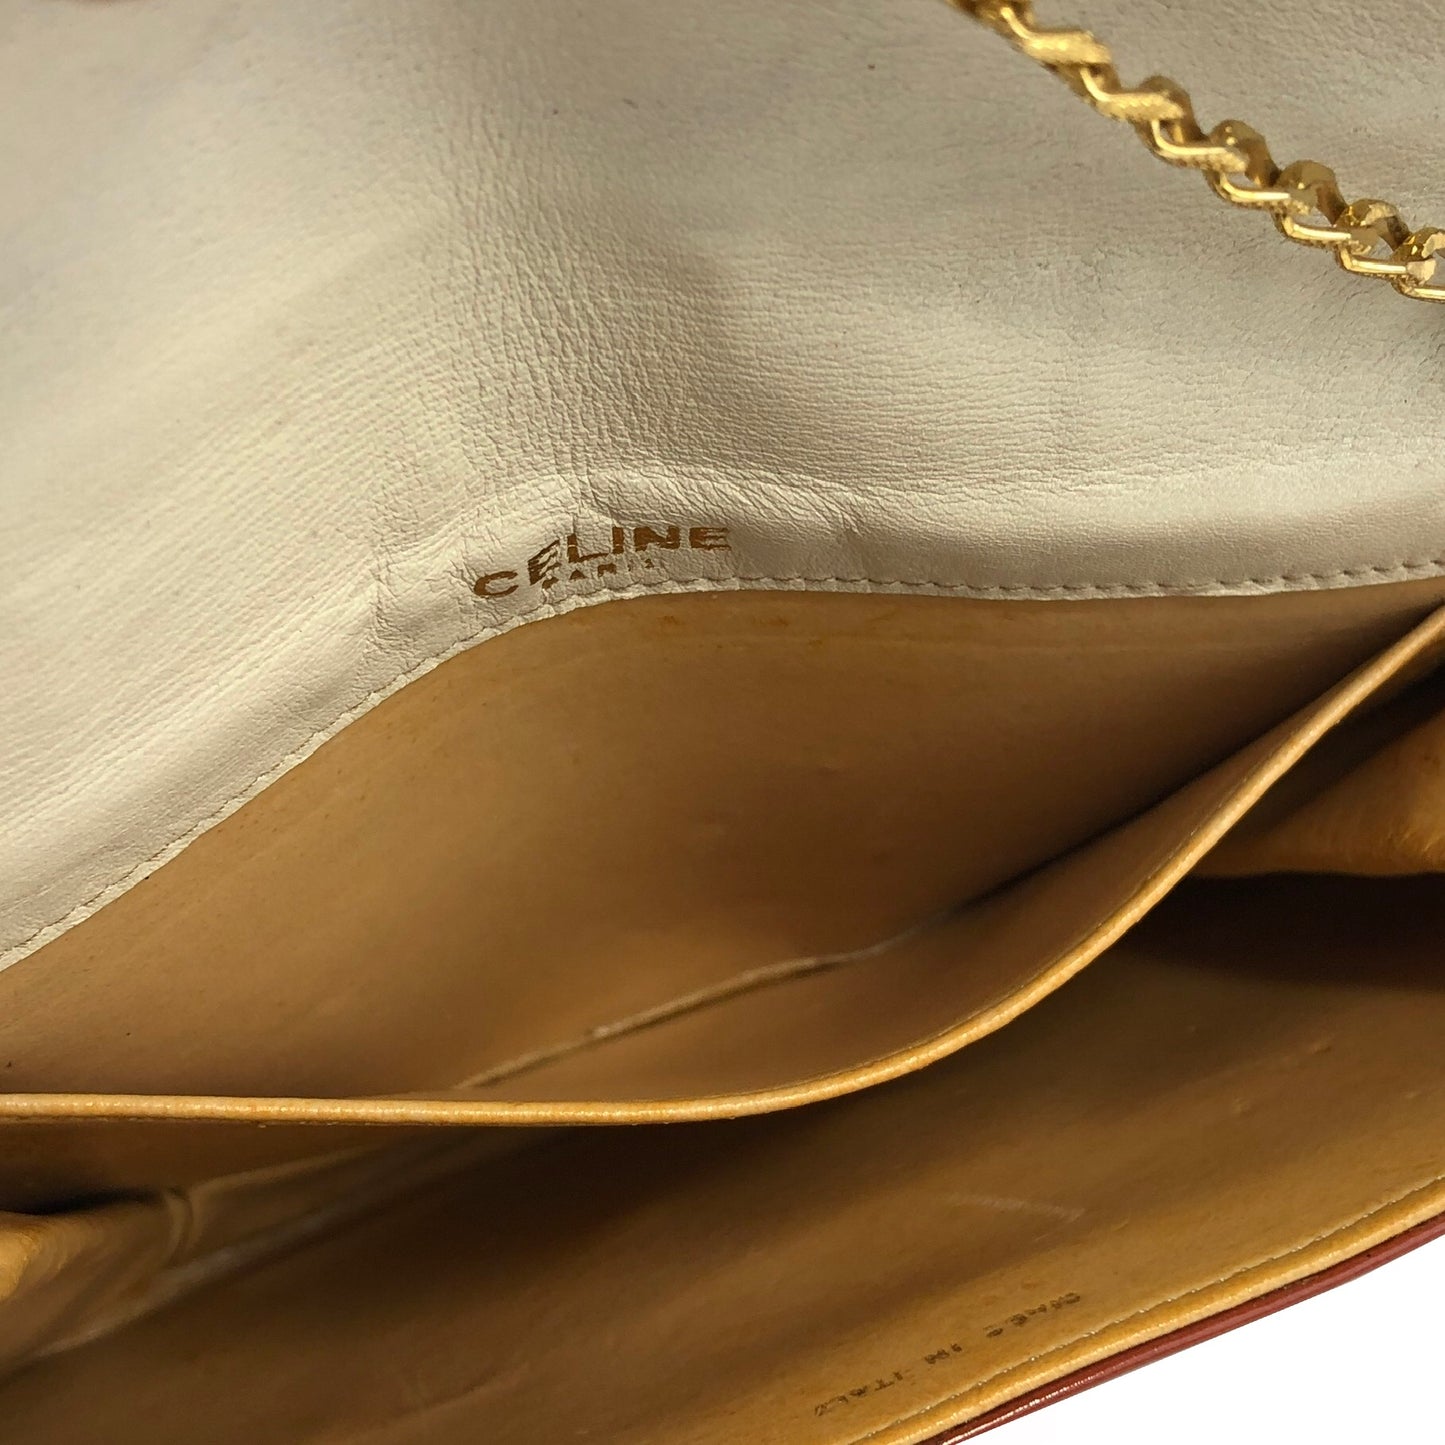 CELINE Triomphe Chain Leather Shoulder bag Brown Vintage tbugmc